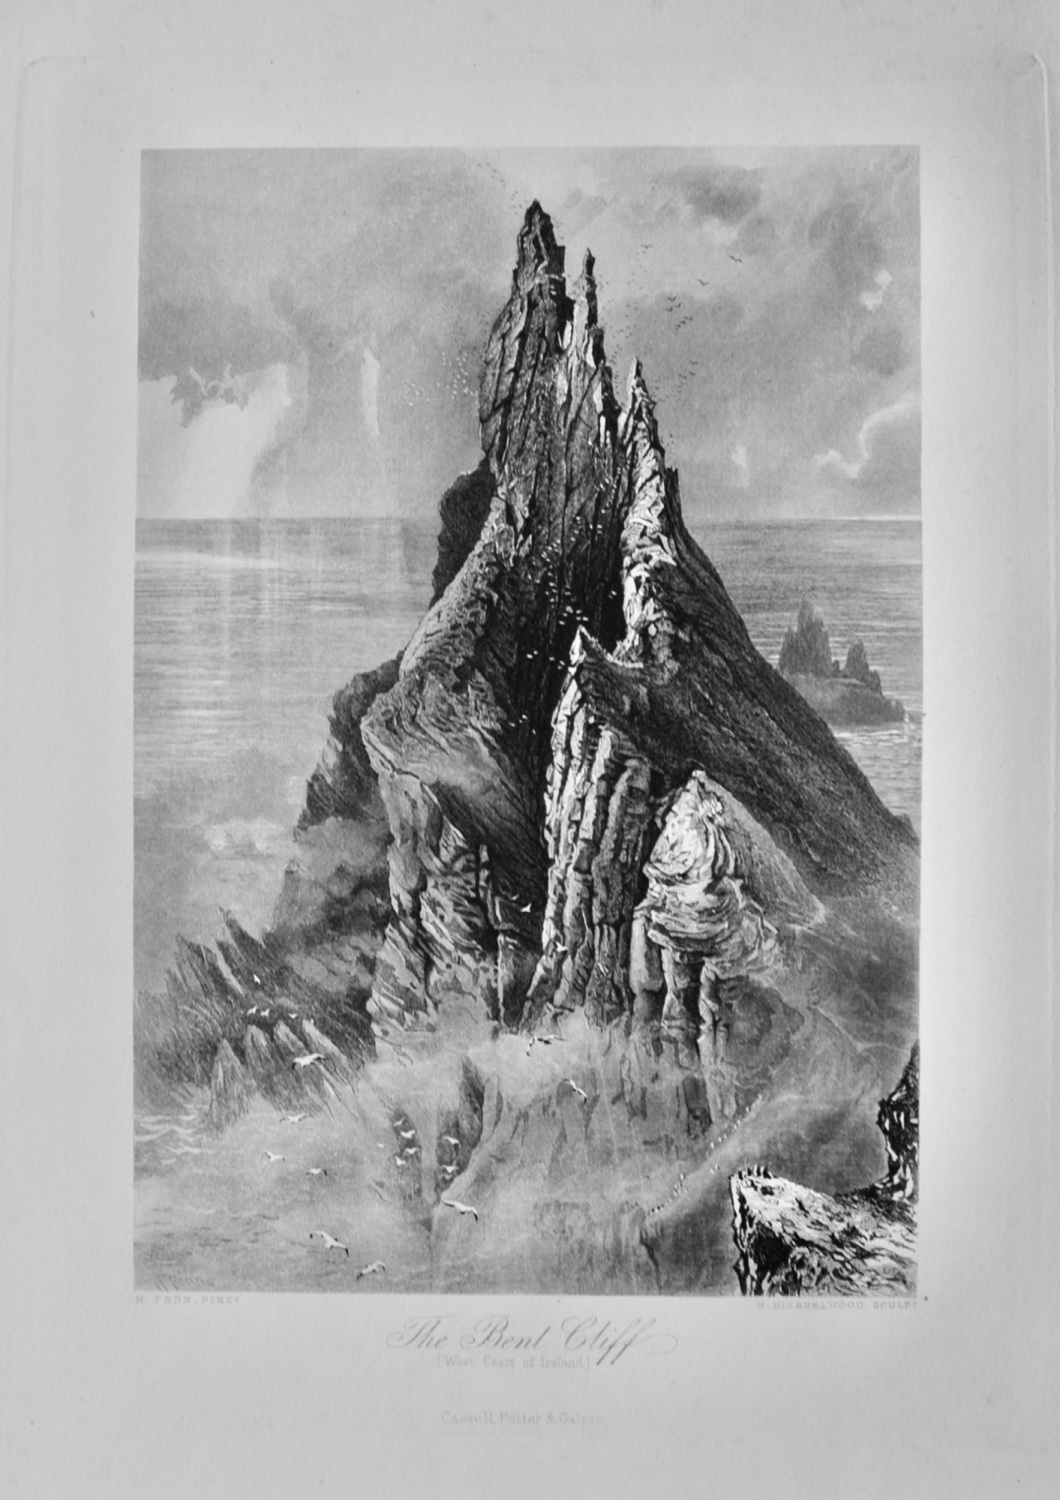 The Bent Cliff.  (West Coast of Ireland) 1881.